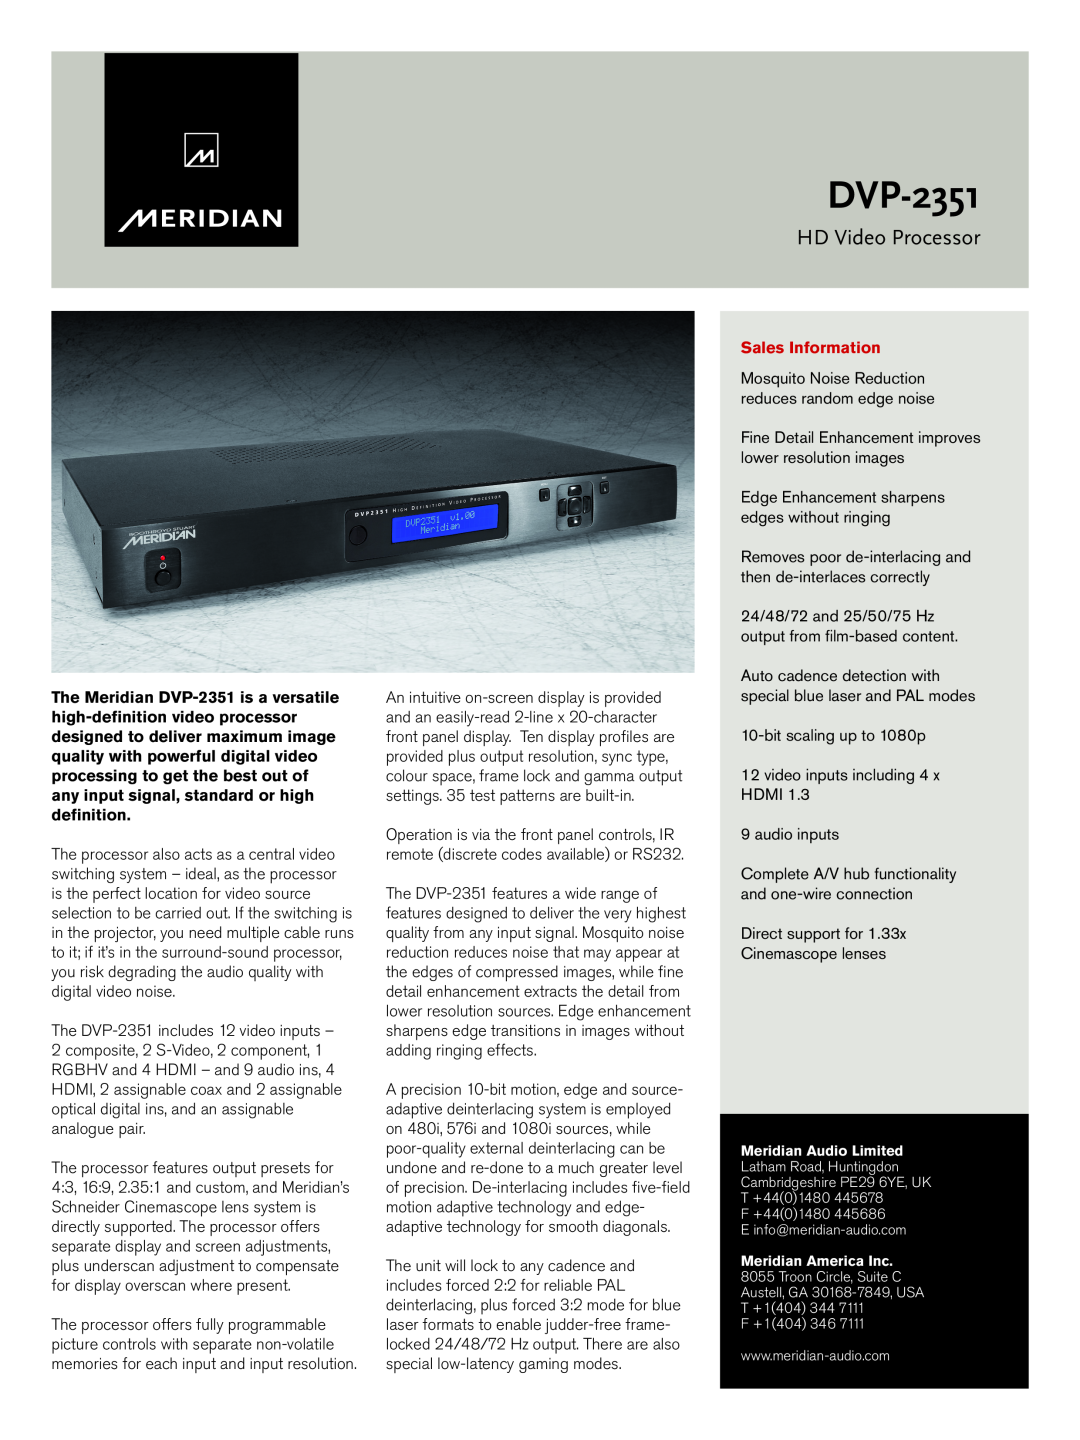 Meridian America DVP-2351 manual HD Video Processor, Sales Information, Meridian Audio Limited, Meridian America Inc 